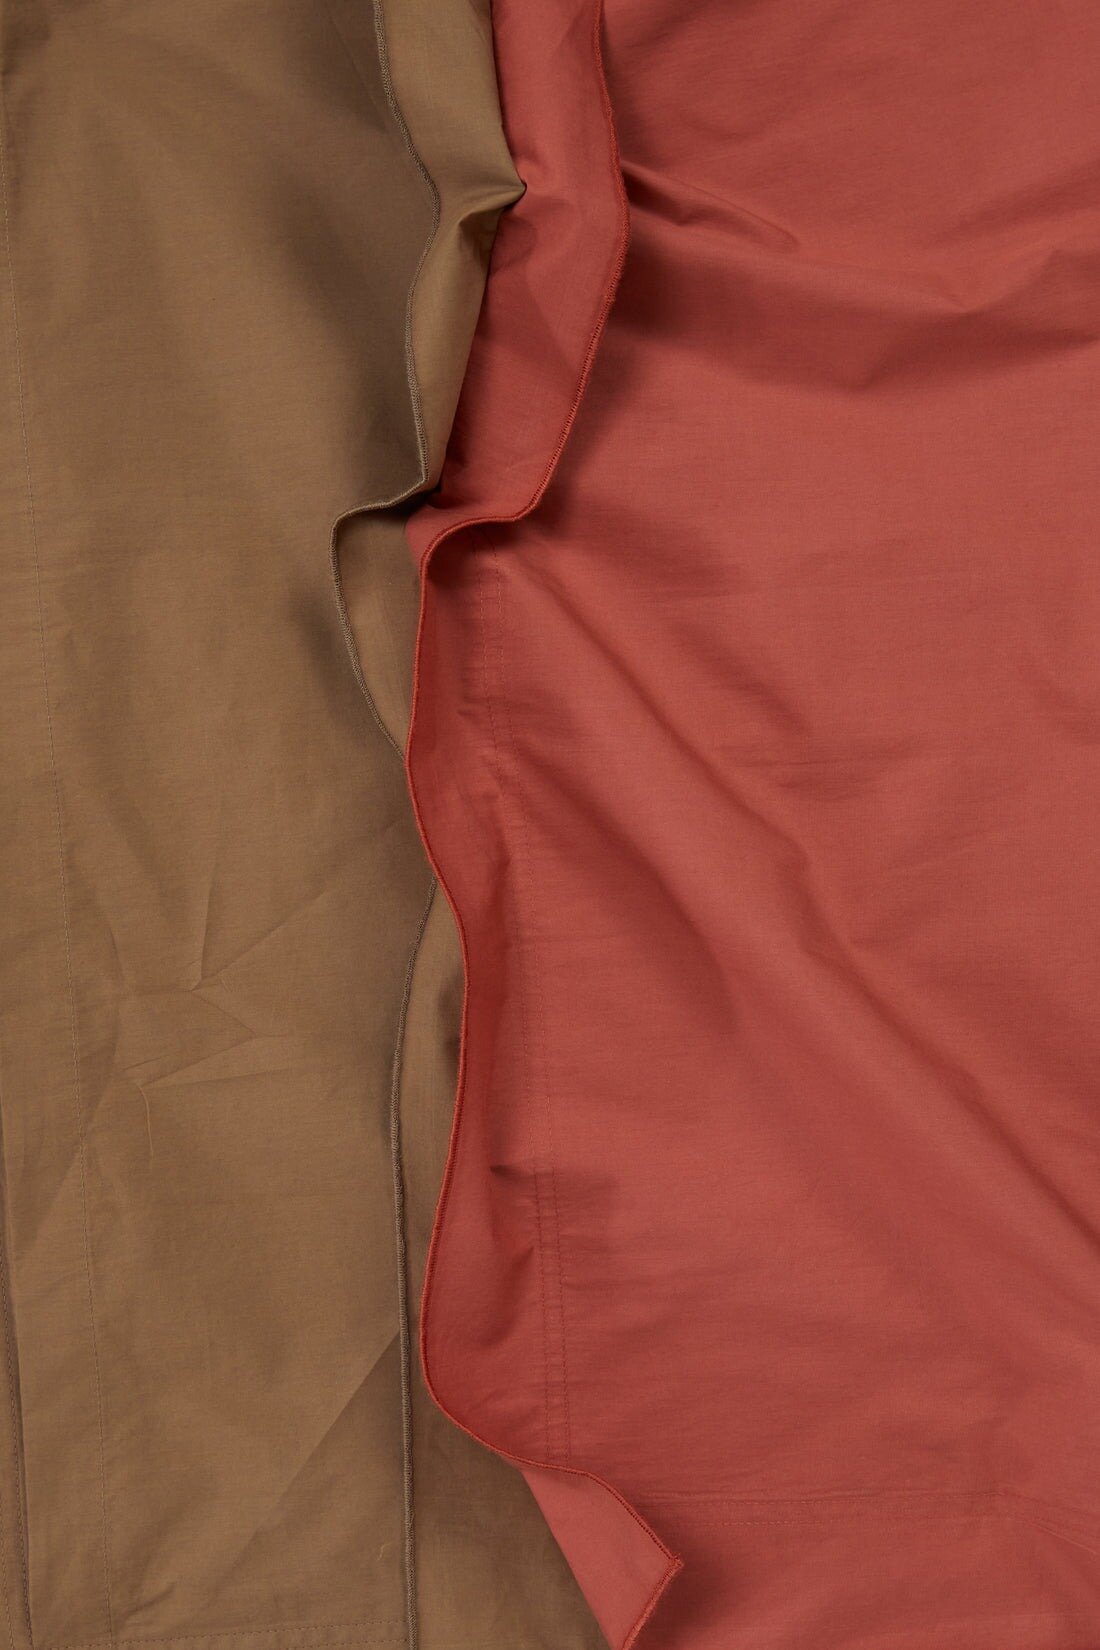 Bi Colour Organic Cotton Percale Pillow Pair - Carob & Ochre Red Pillows in Standard Pillow